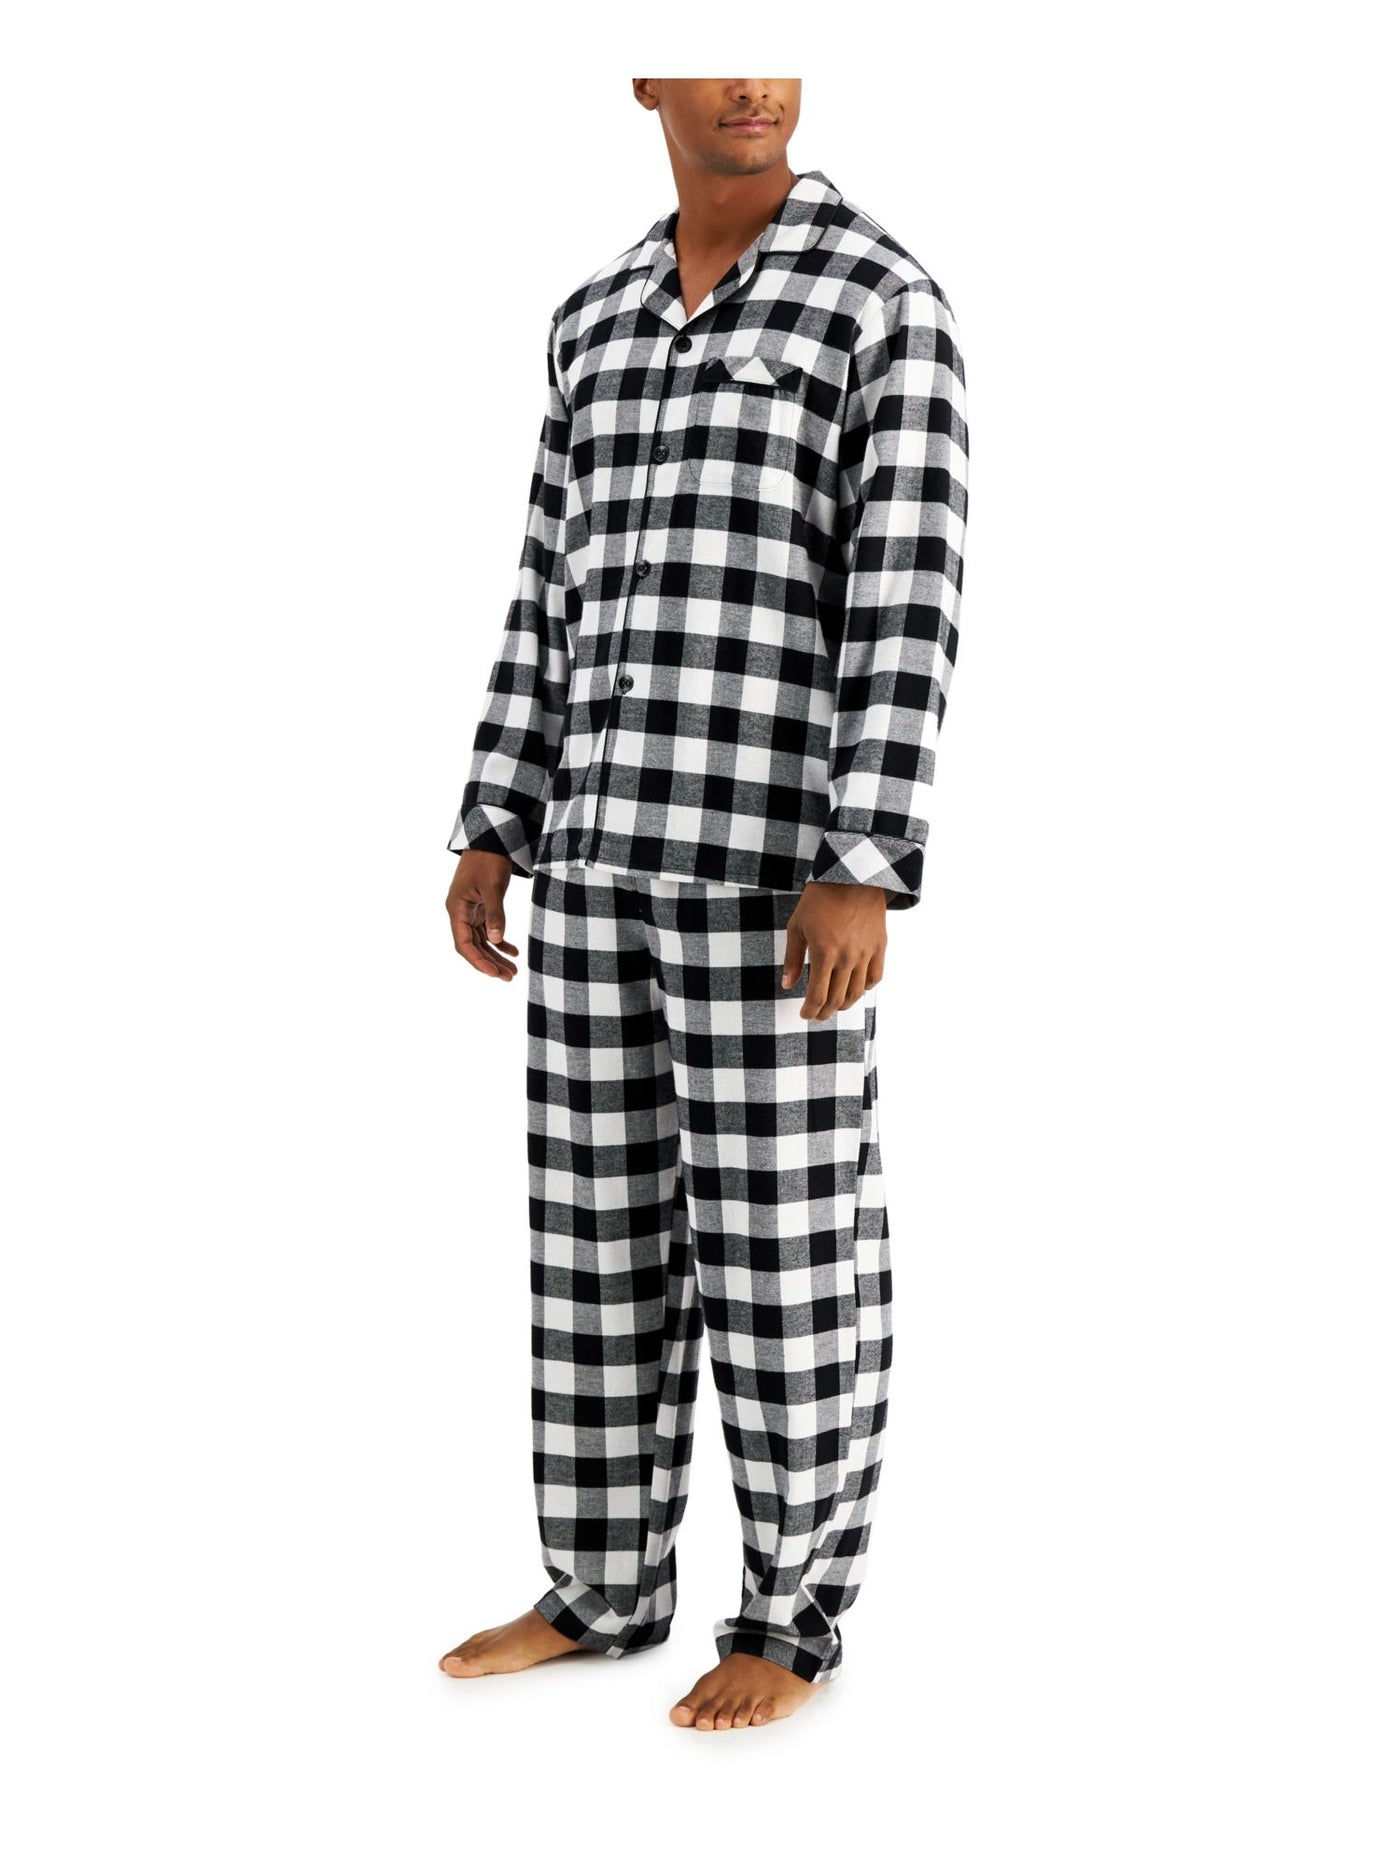 FAMILY PJs Mens Black Plaid Elastic Band Long Sleeve Button Up Top Straight leg Pants Flannel Pajamas M